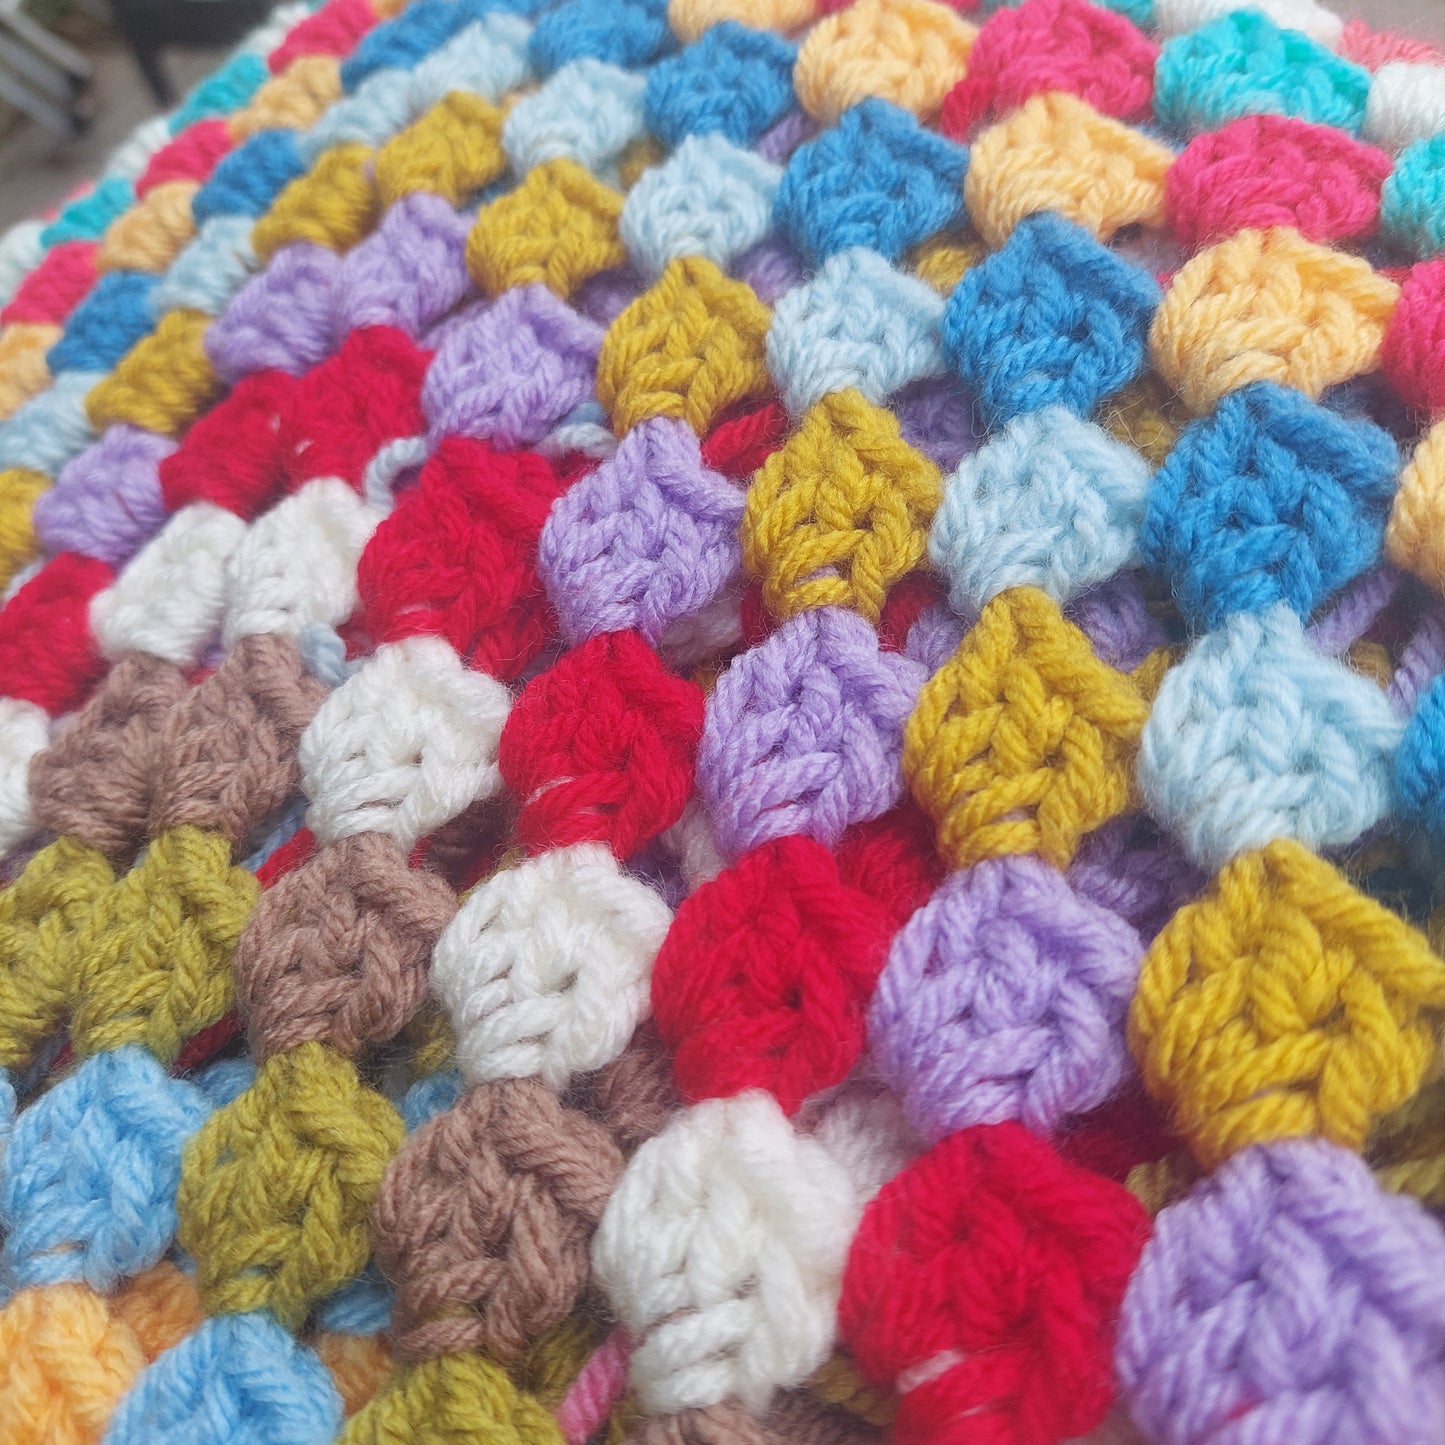 Large Random Crochet Granny Square Blanket - No 4